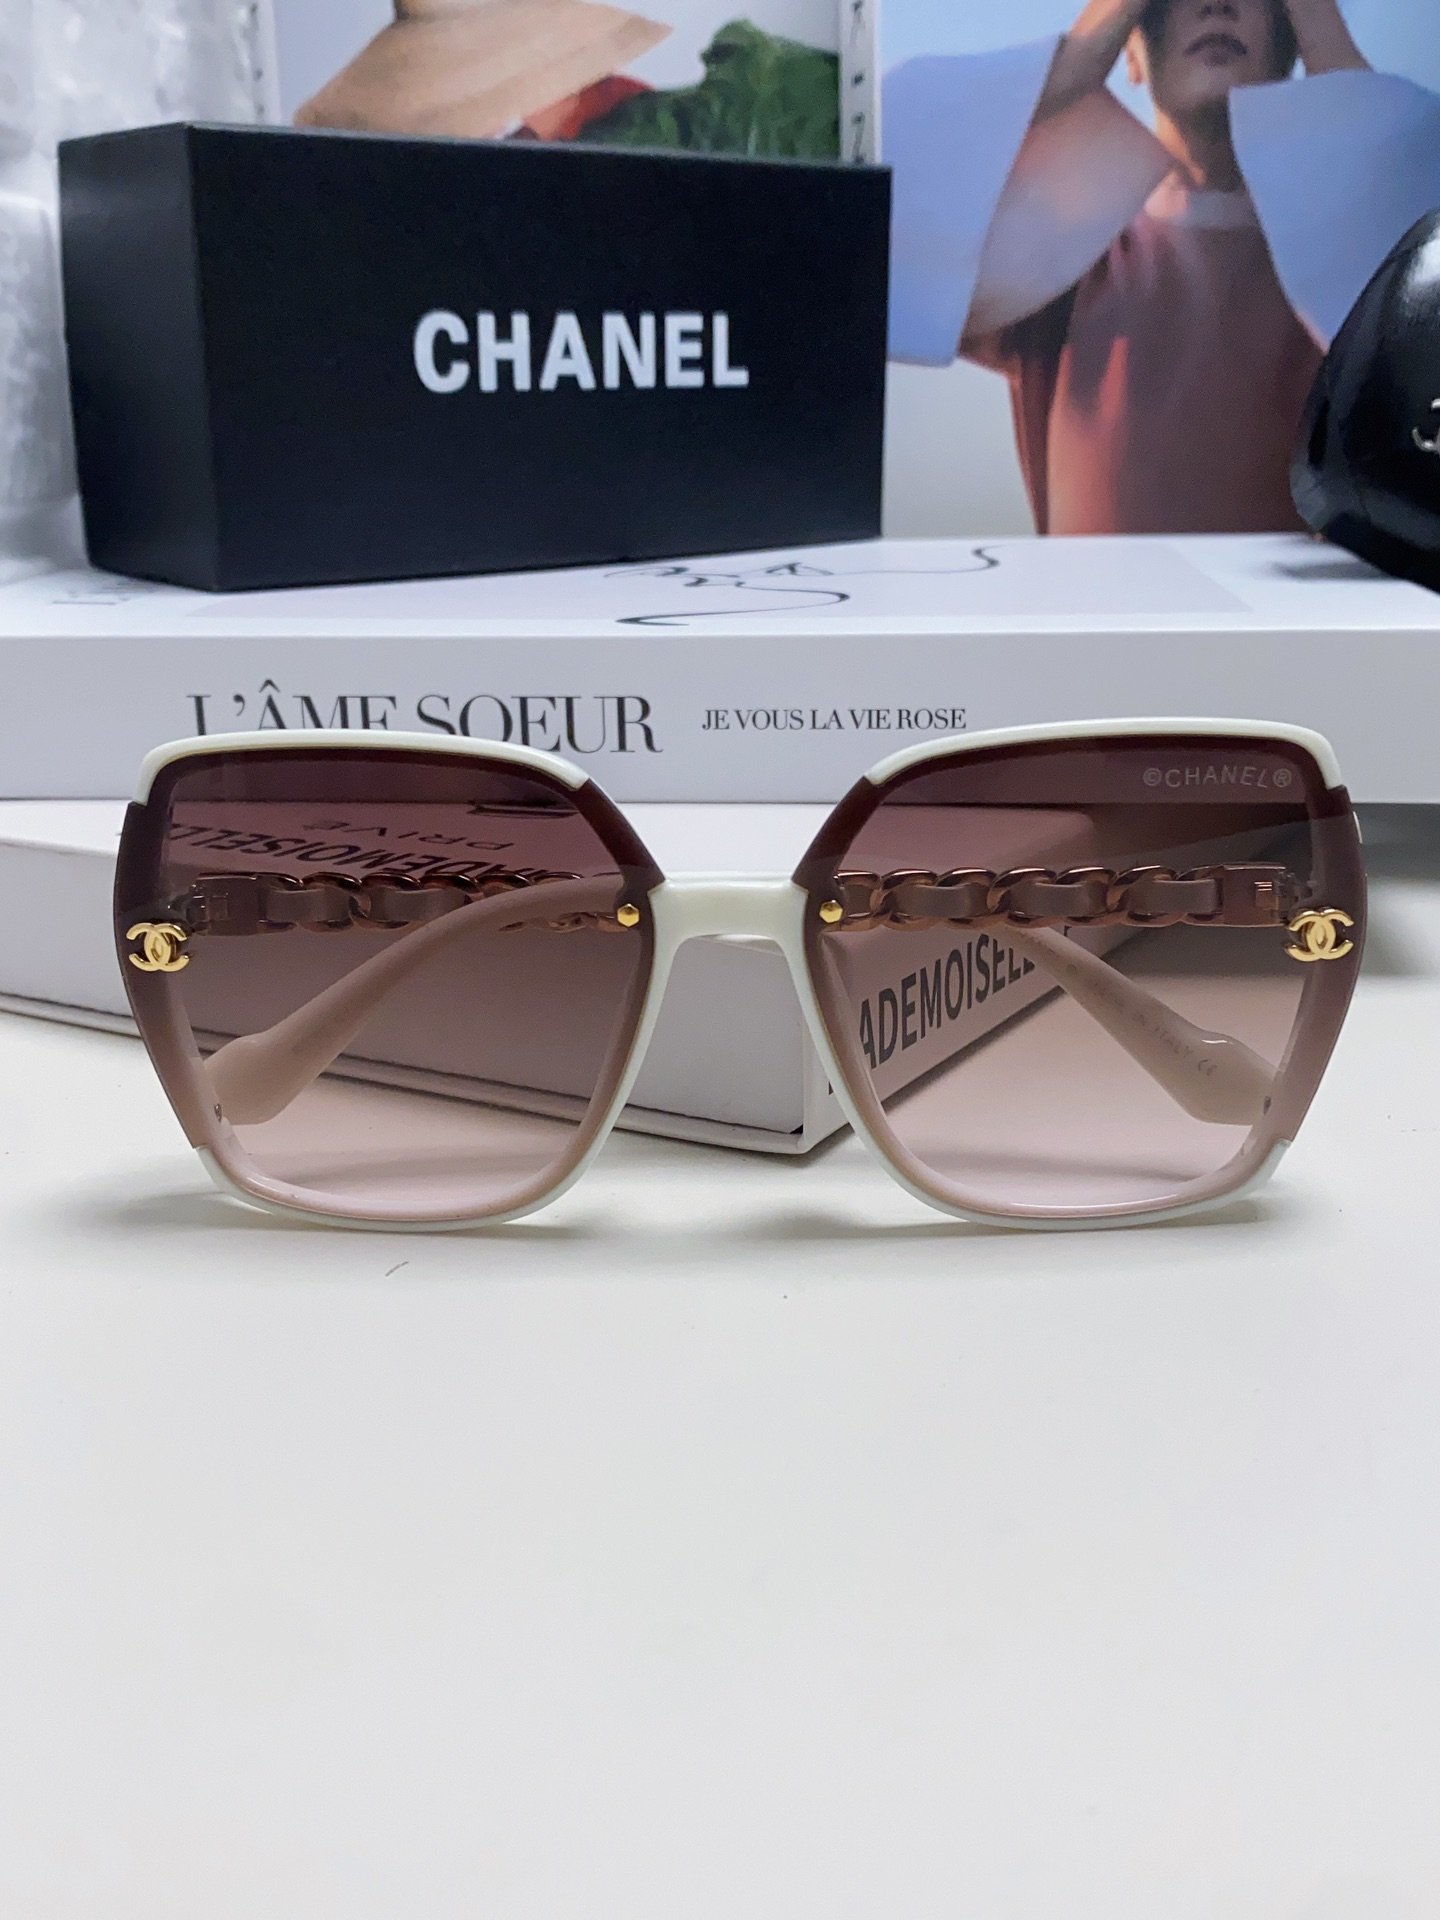 Chanel香奈儿欧美境外新款太阳镜C家网红男女款大牌墨镜旅游驾驶眼镜潮流版型搭配皮链